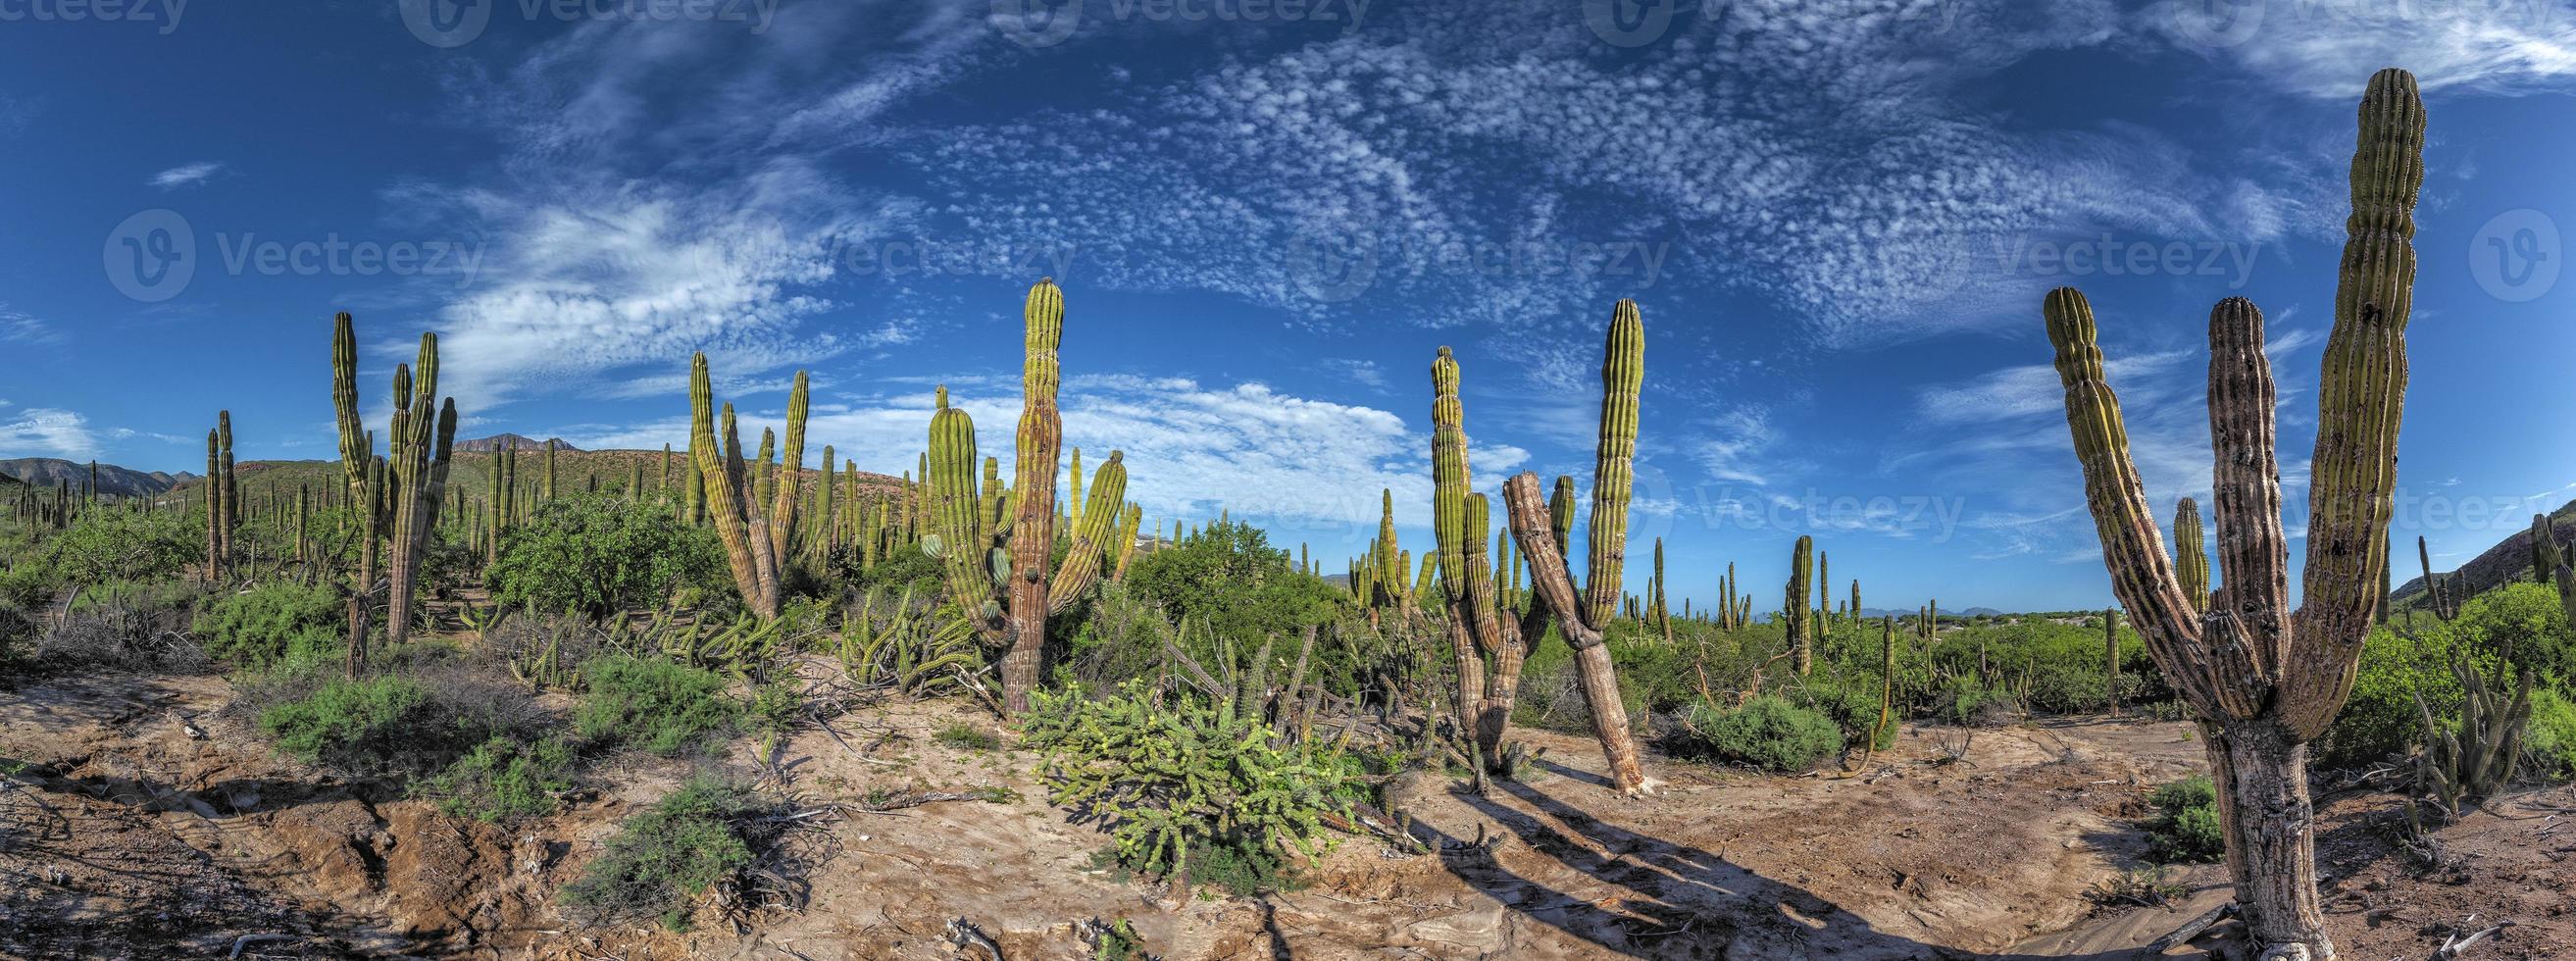 baja kalifornien sur jätte kaktus i öken- foto